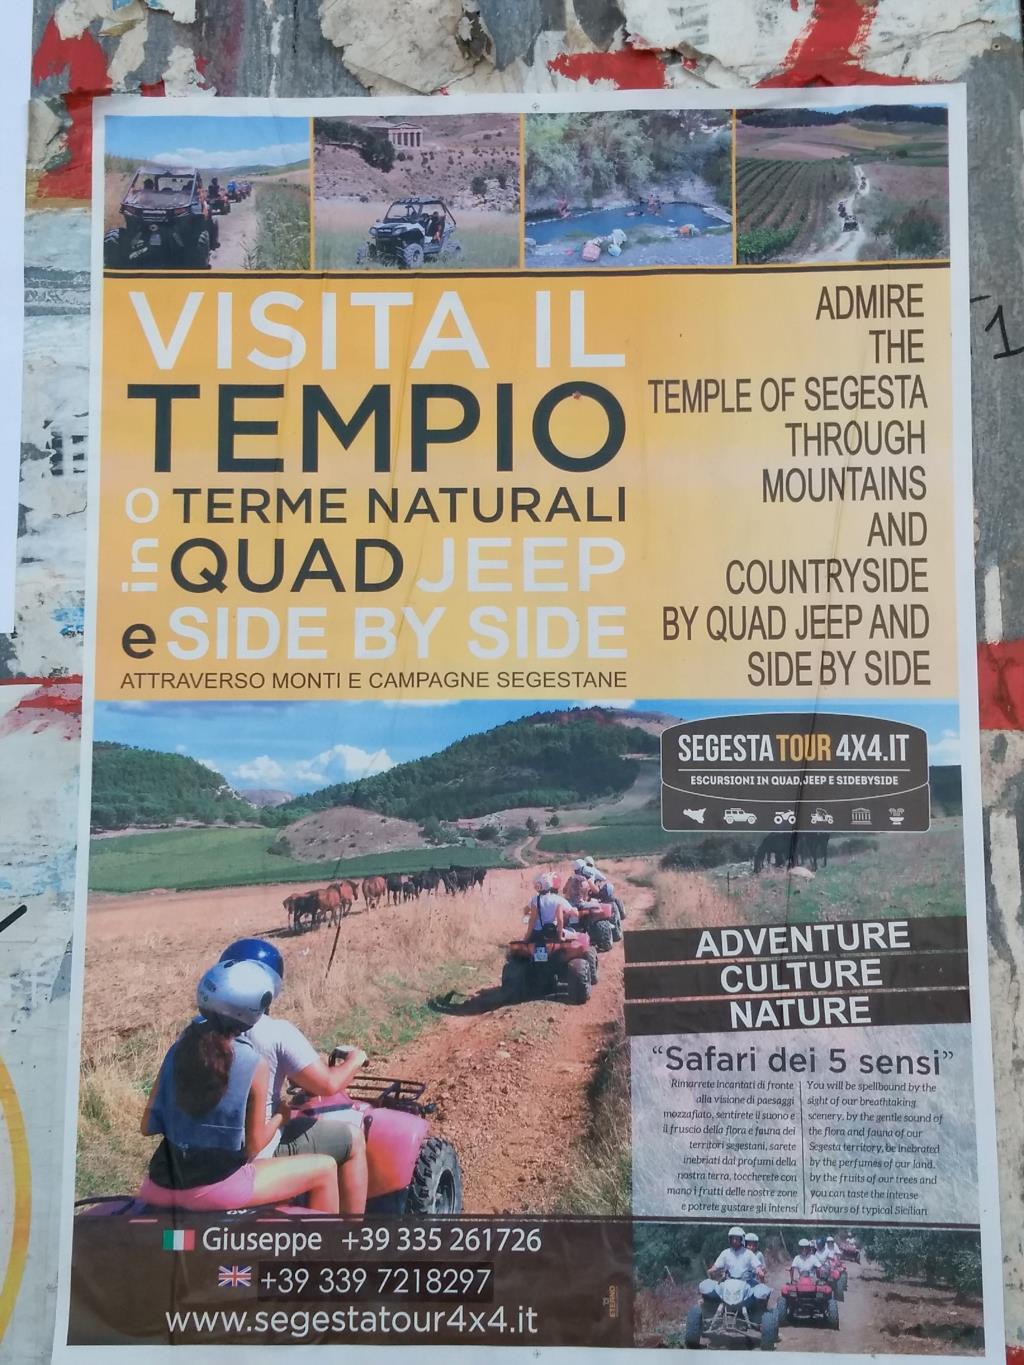 Visita Tempio o Terme Naturali in Quad o Side by Side